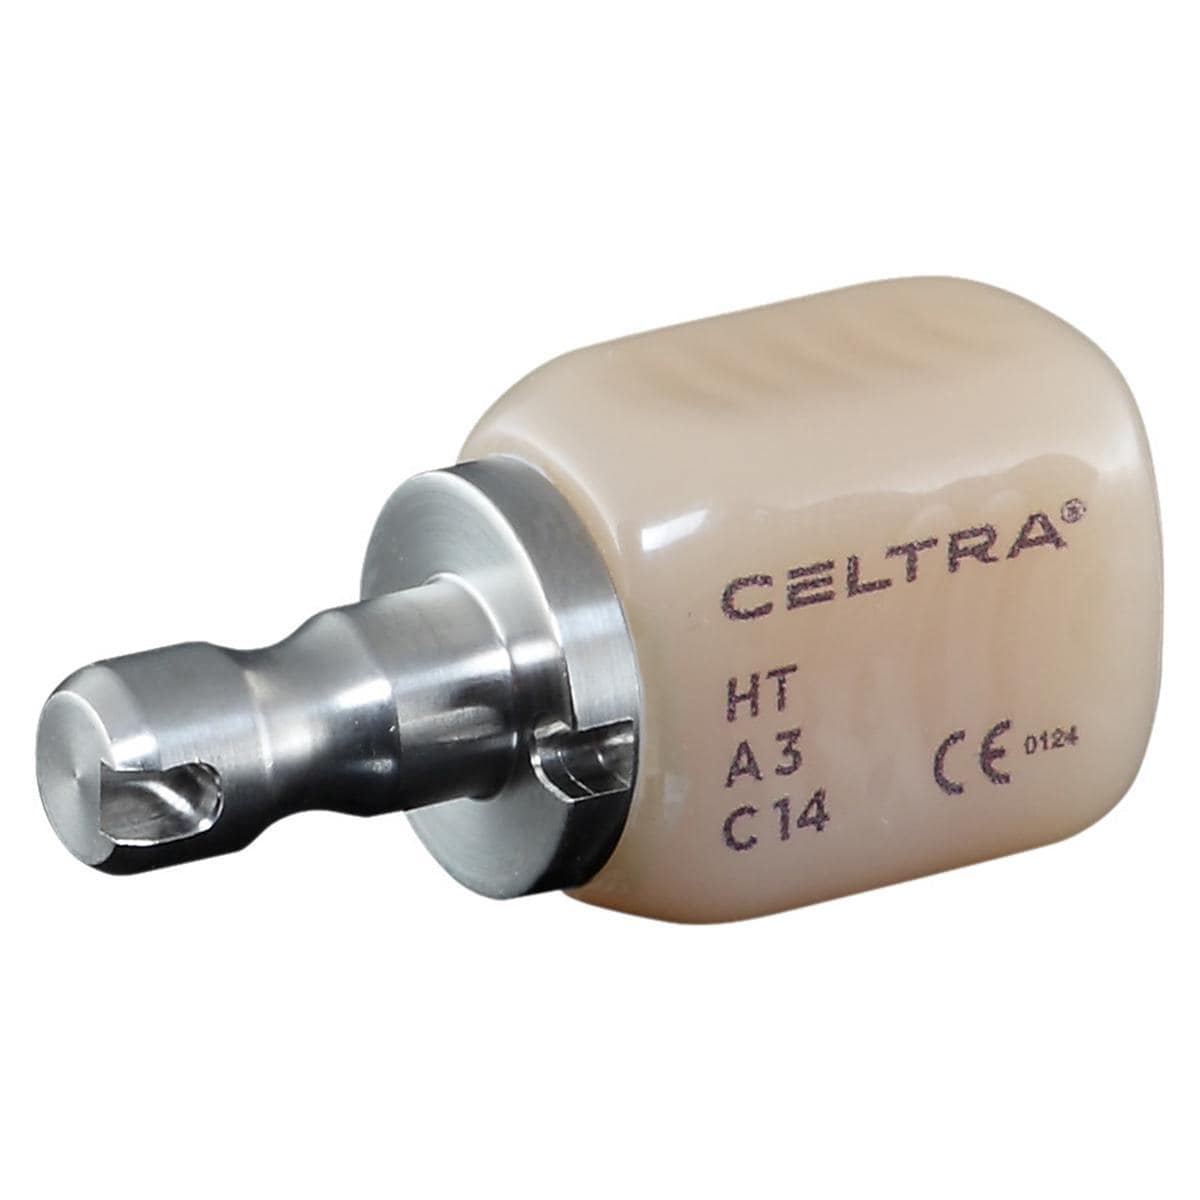 CELTRA® DUO HT - Nachfüllpackung - A3, Größe C14, Packung 4 Stück